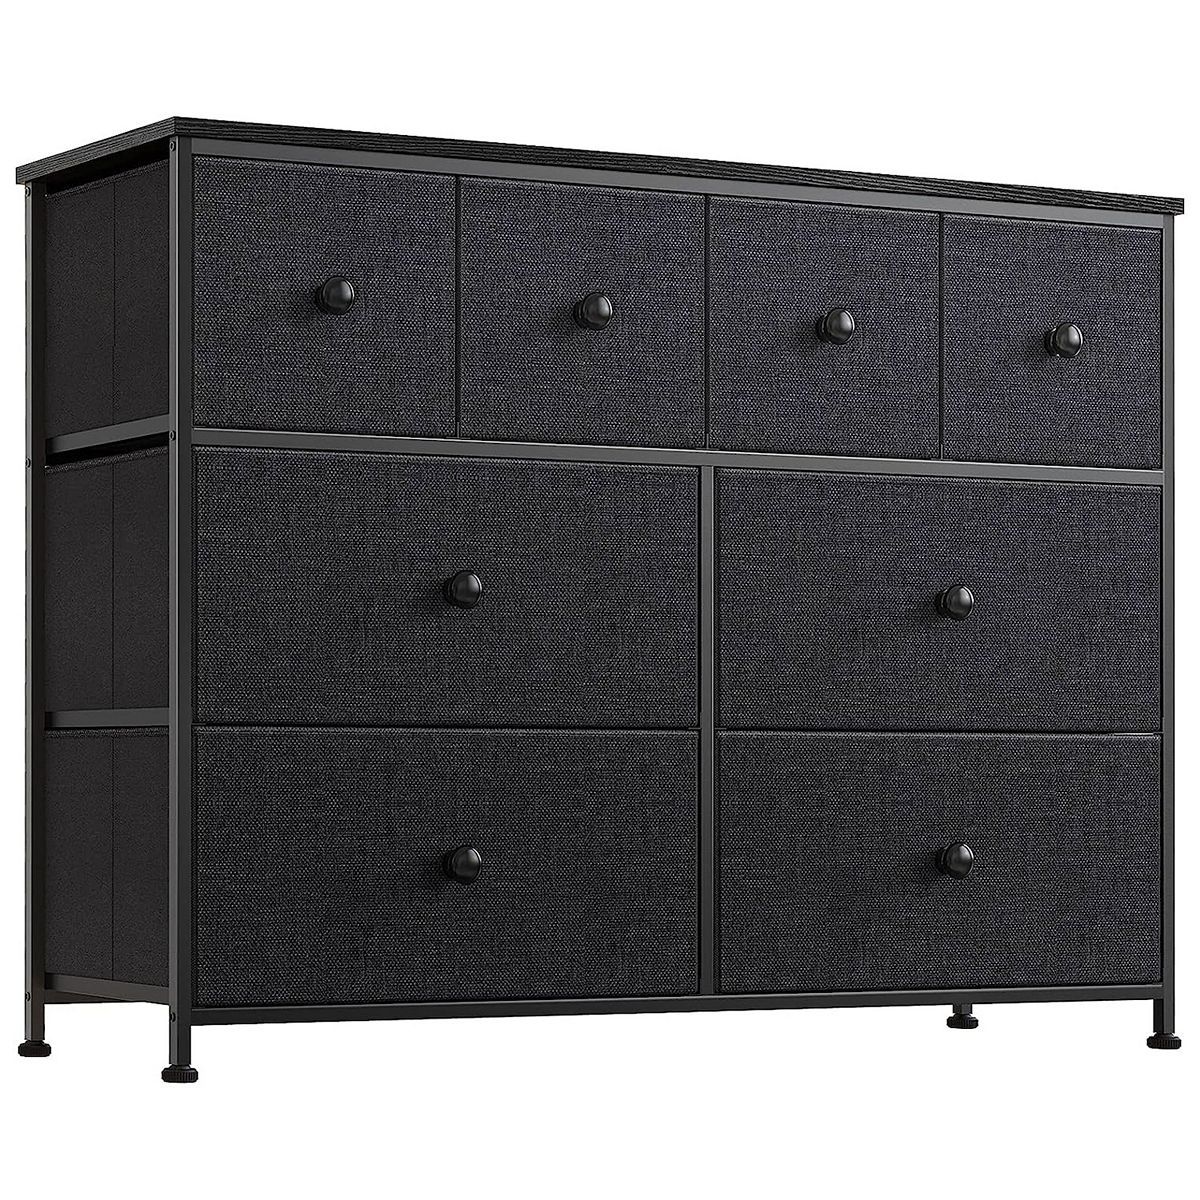 REAHOME 8 Drawer Steel Frame Bedroom Storage Organizer Chest Dresser, Black/Gray | Kohl's